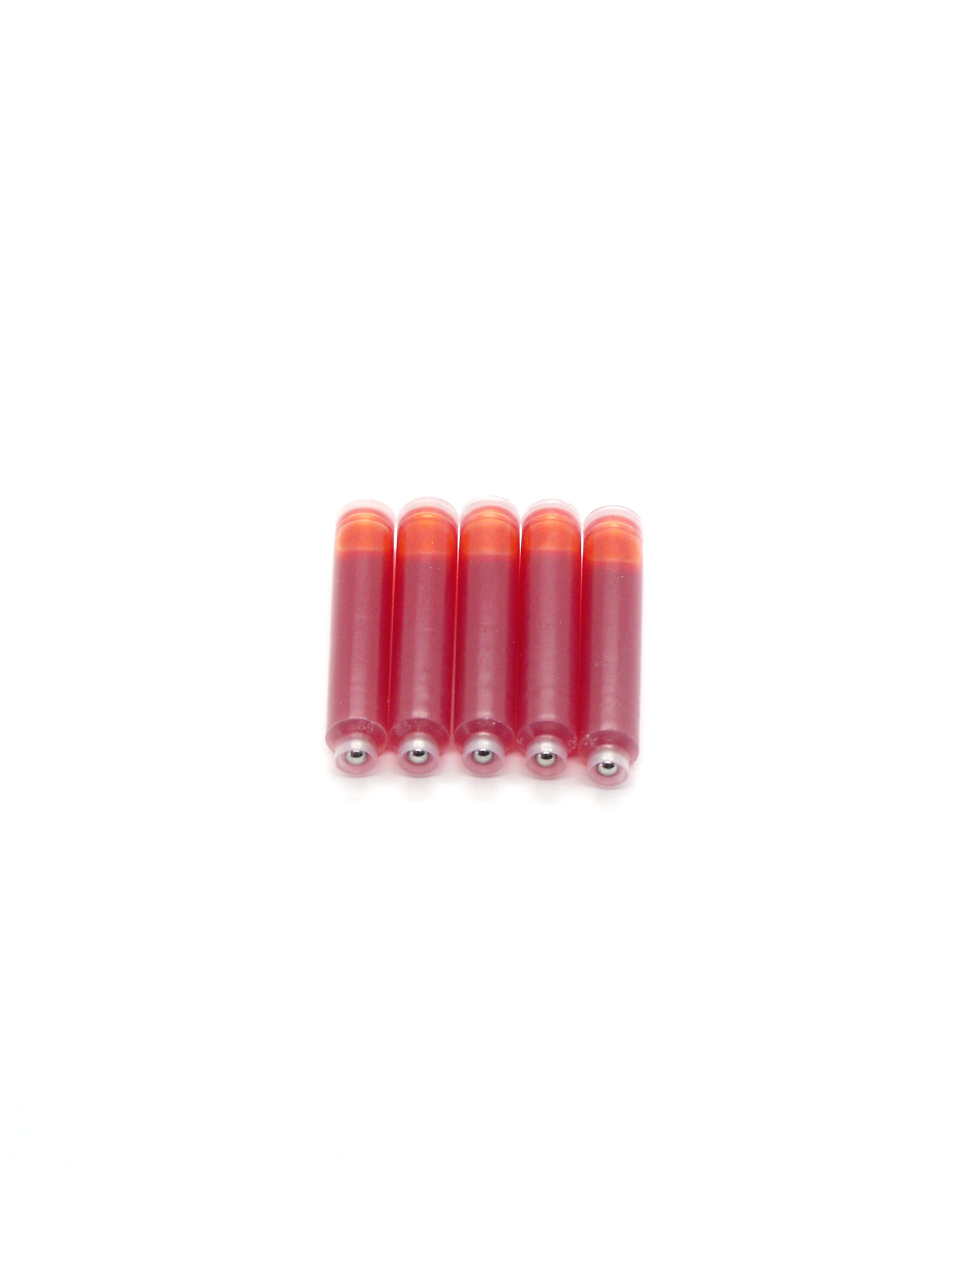 Top Ink Cartridges For Filcao Fountain Pens (Orange)